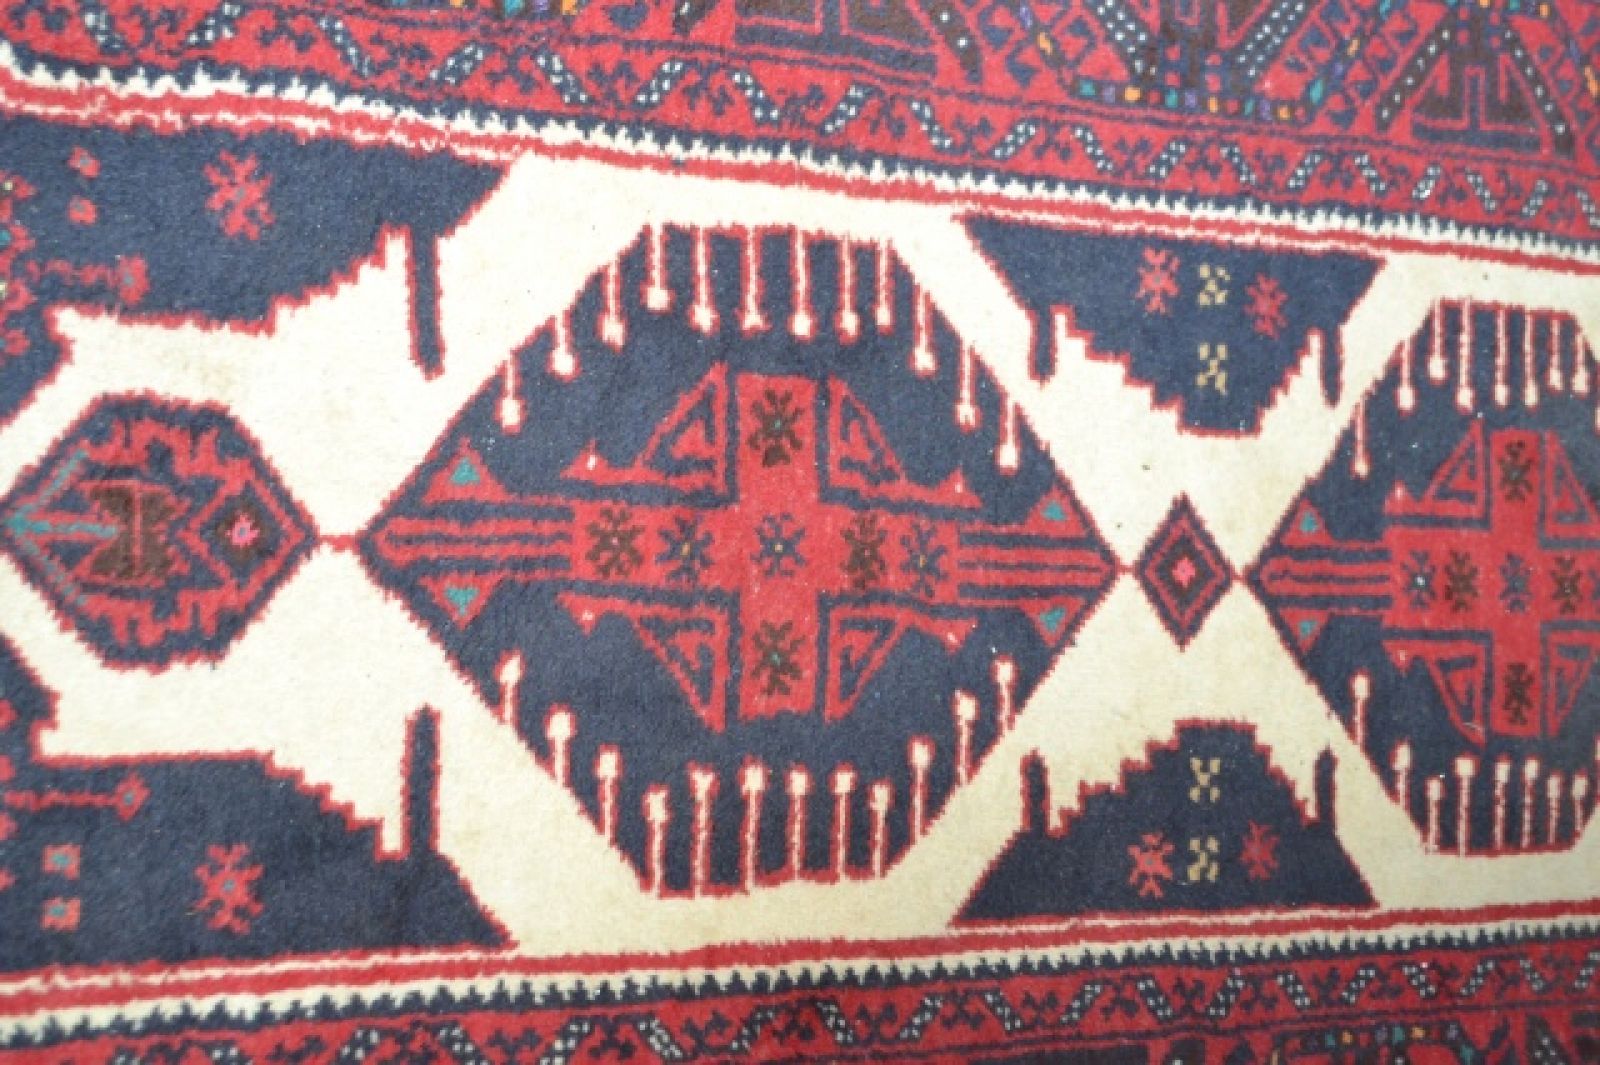 A large Afghan Carpet.